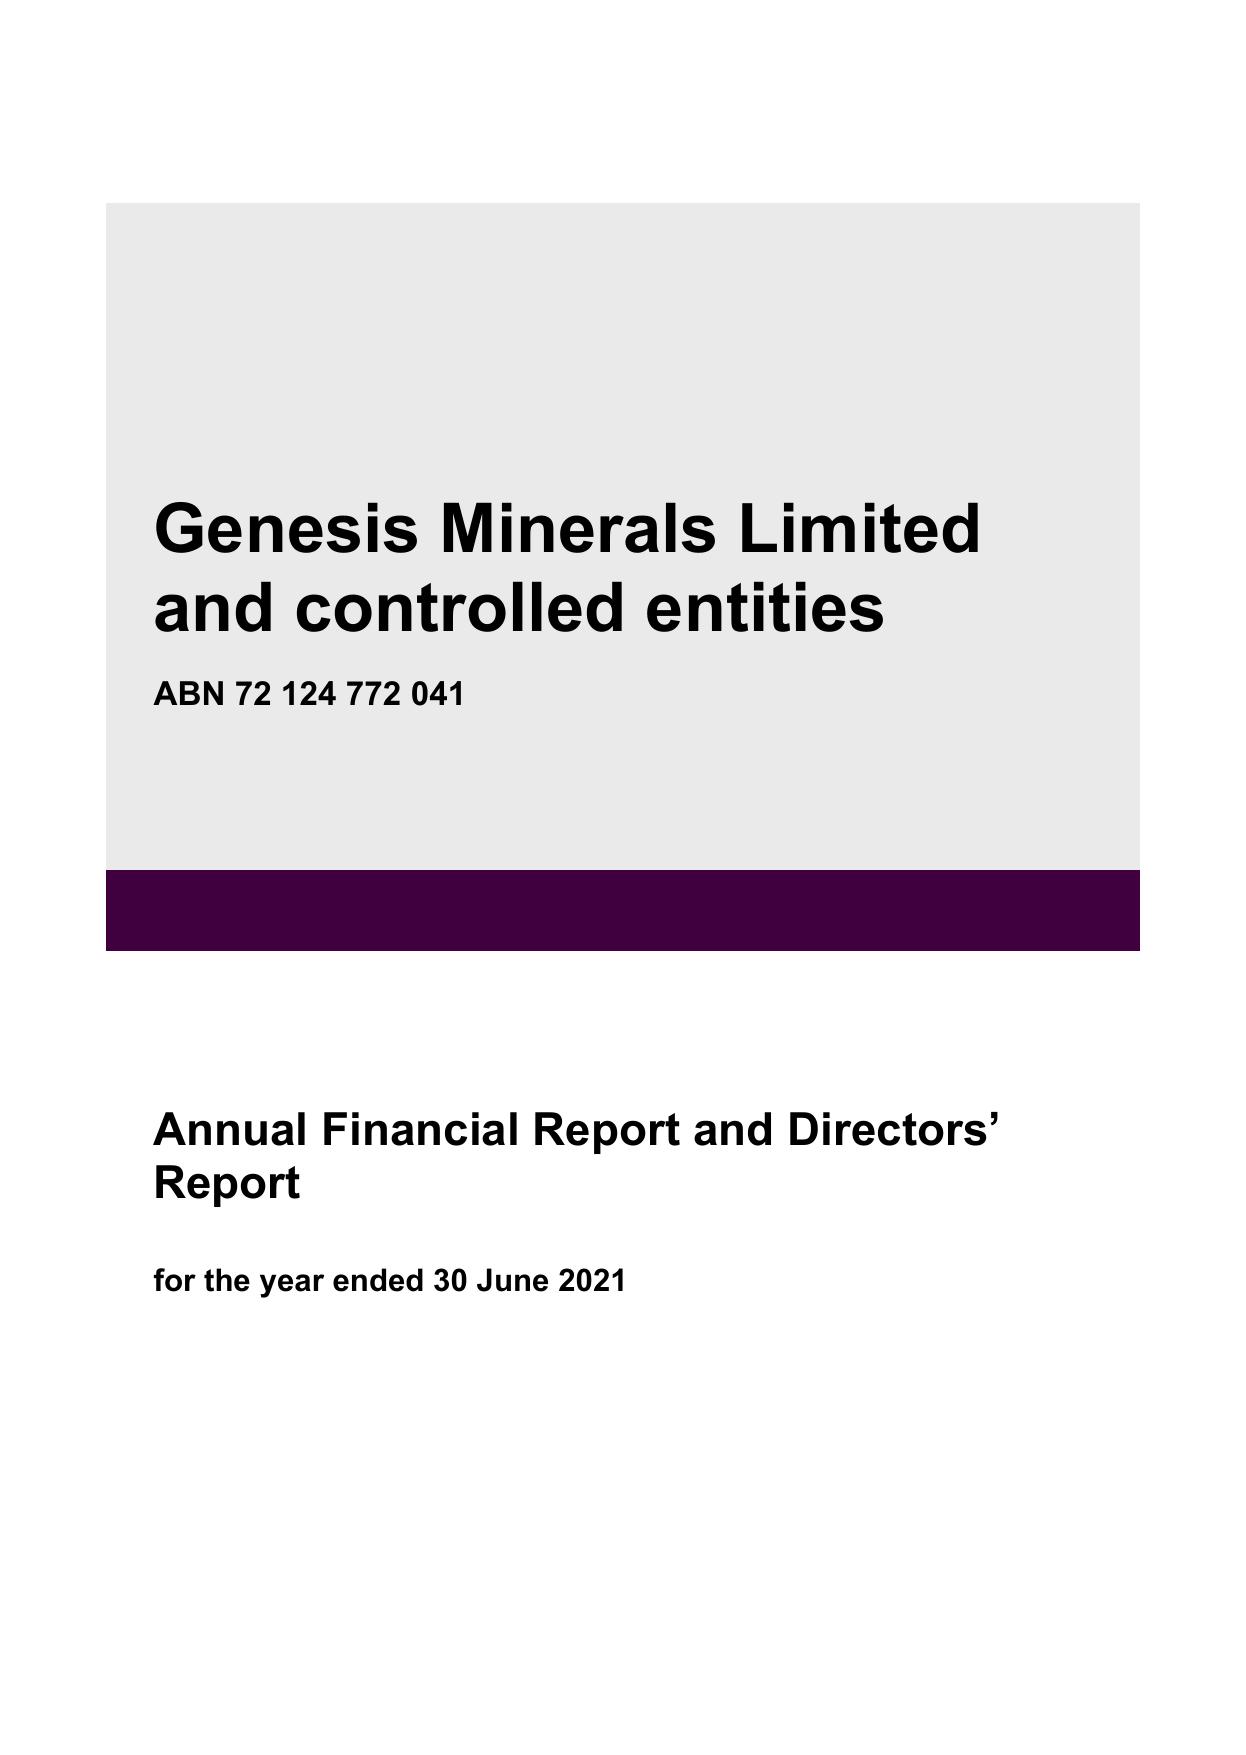 GENESISMINERALS 2021 Annual Report